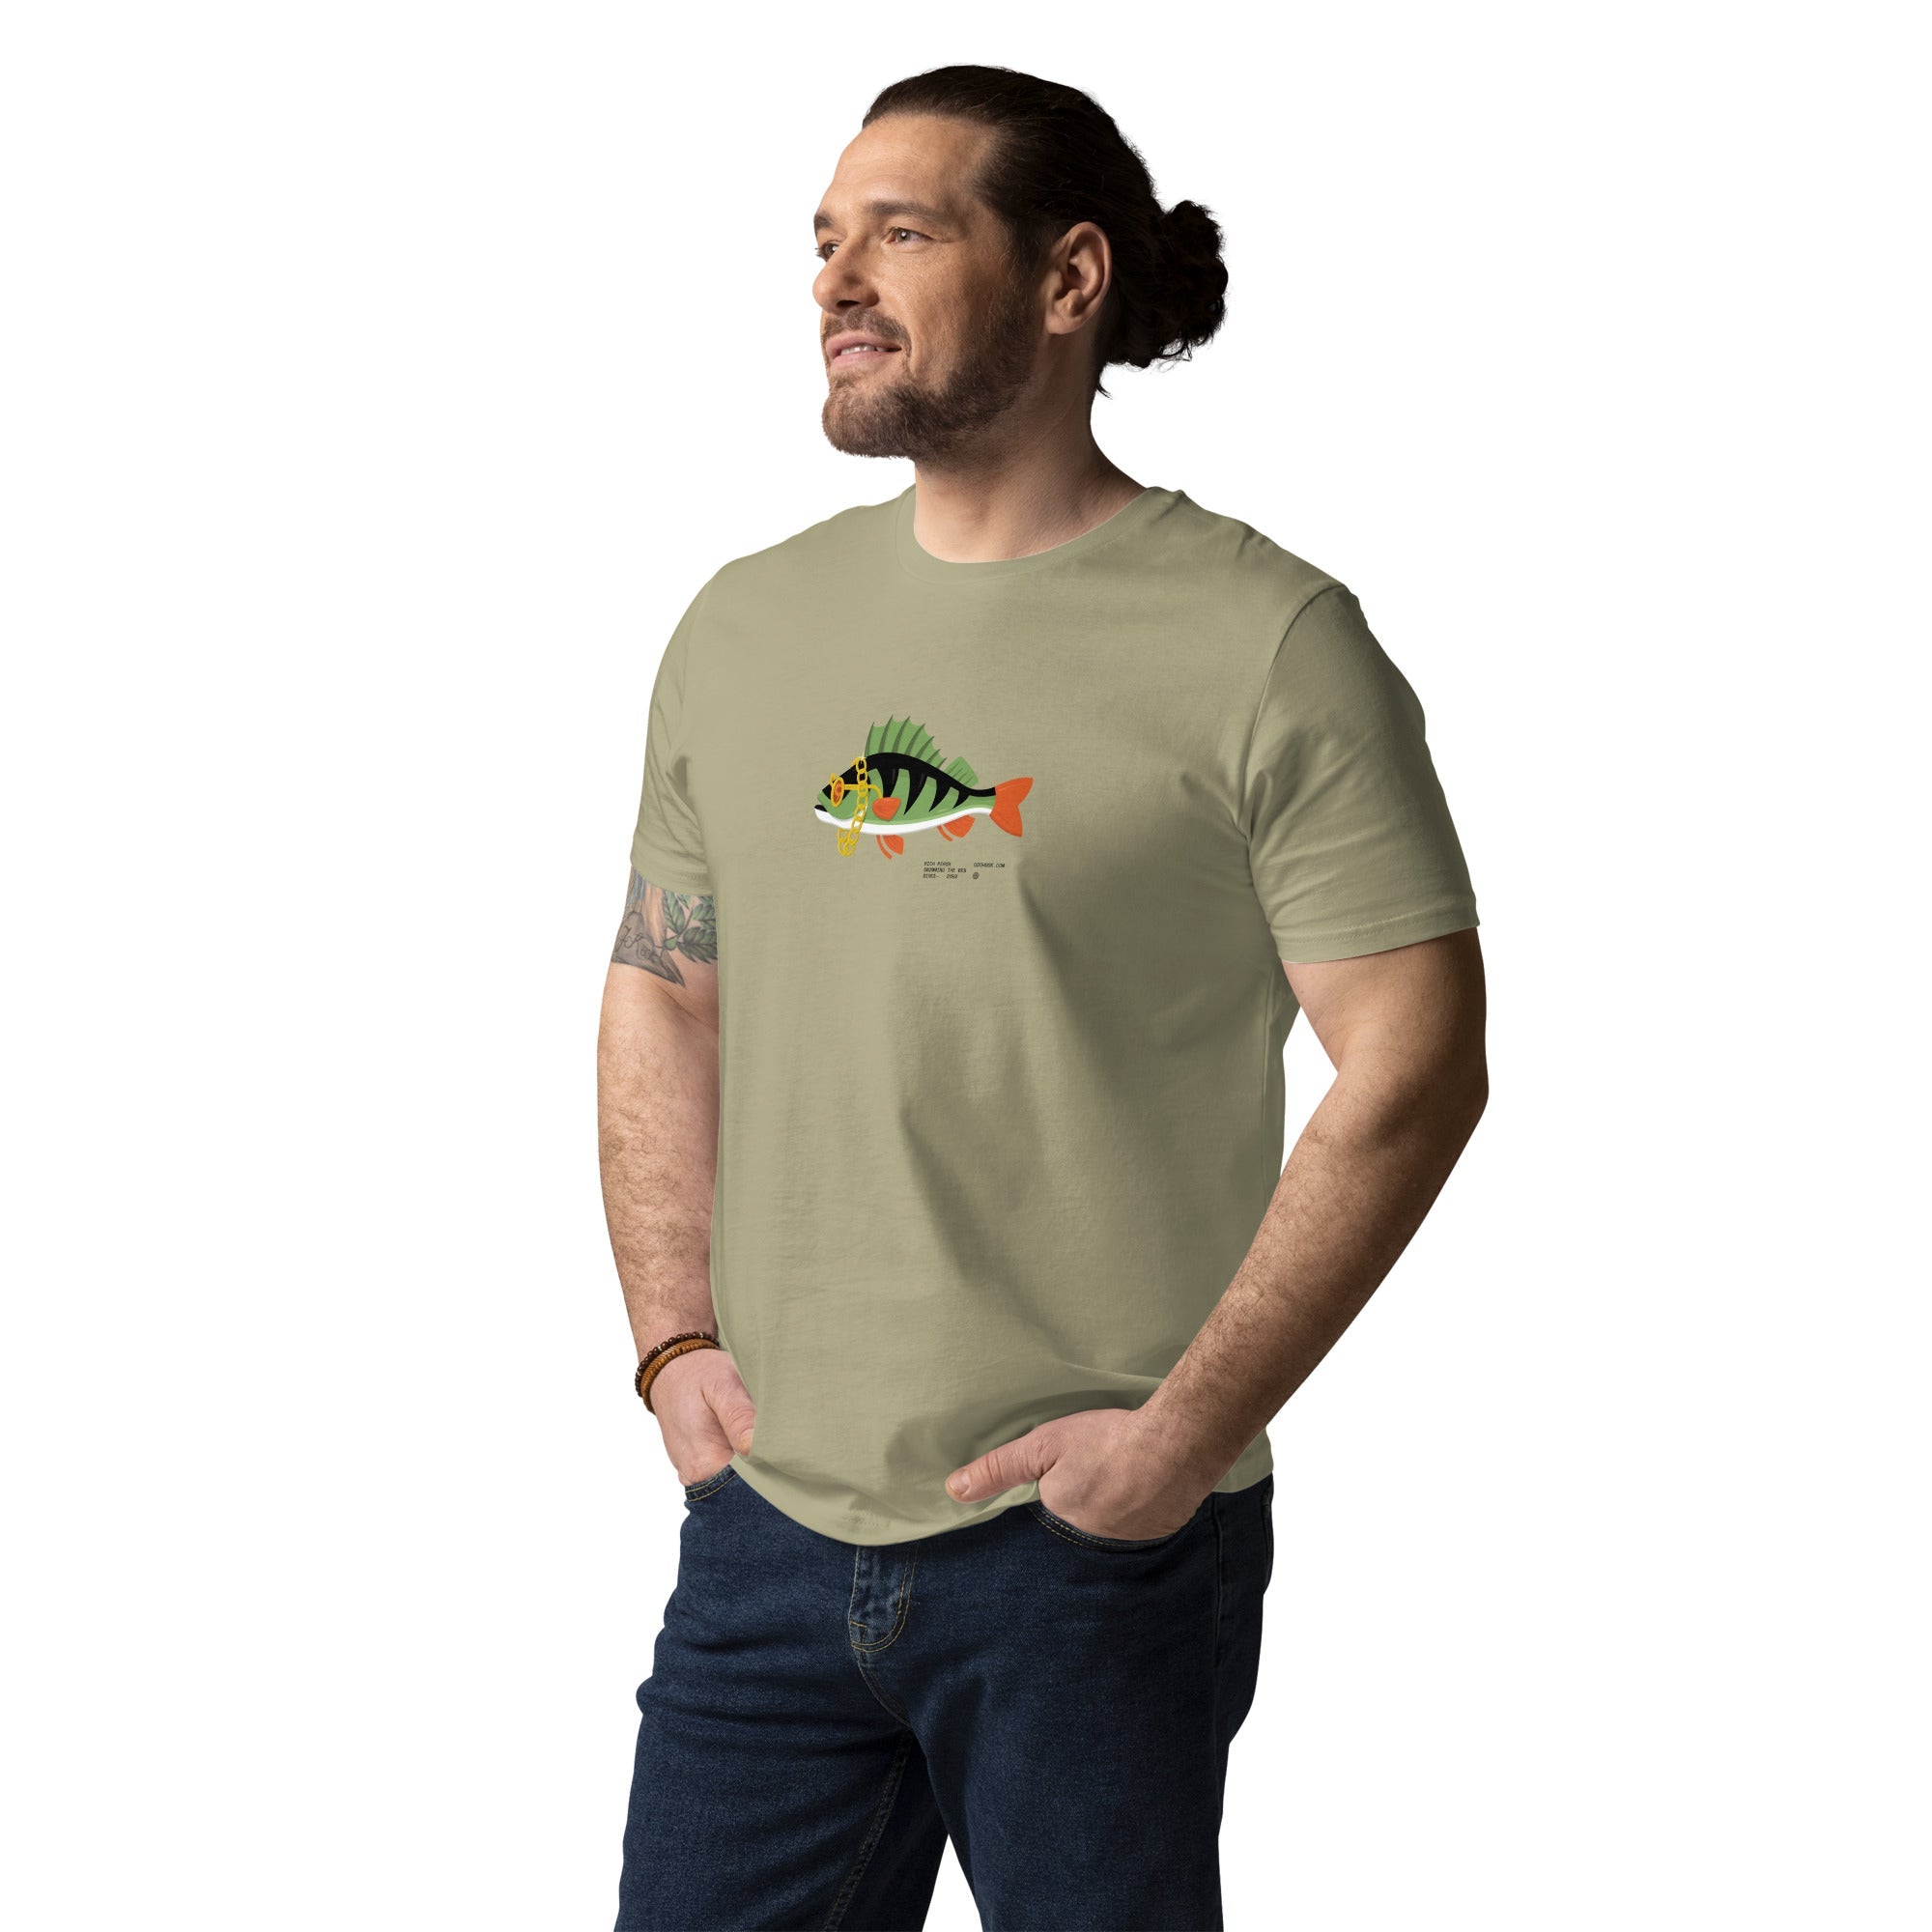 Rich Perch T-shirt - Oddhook